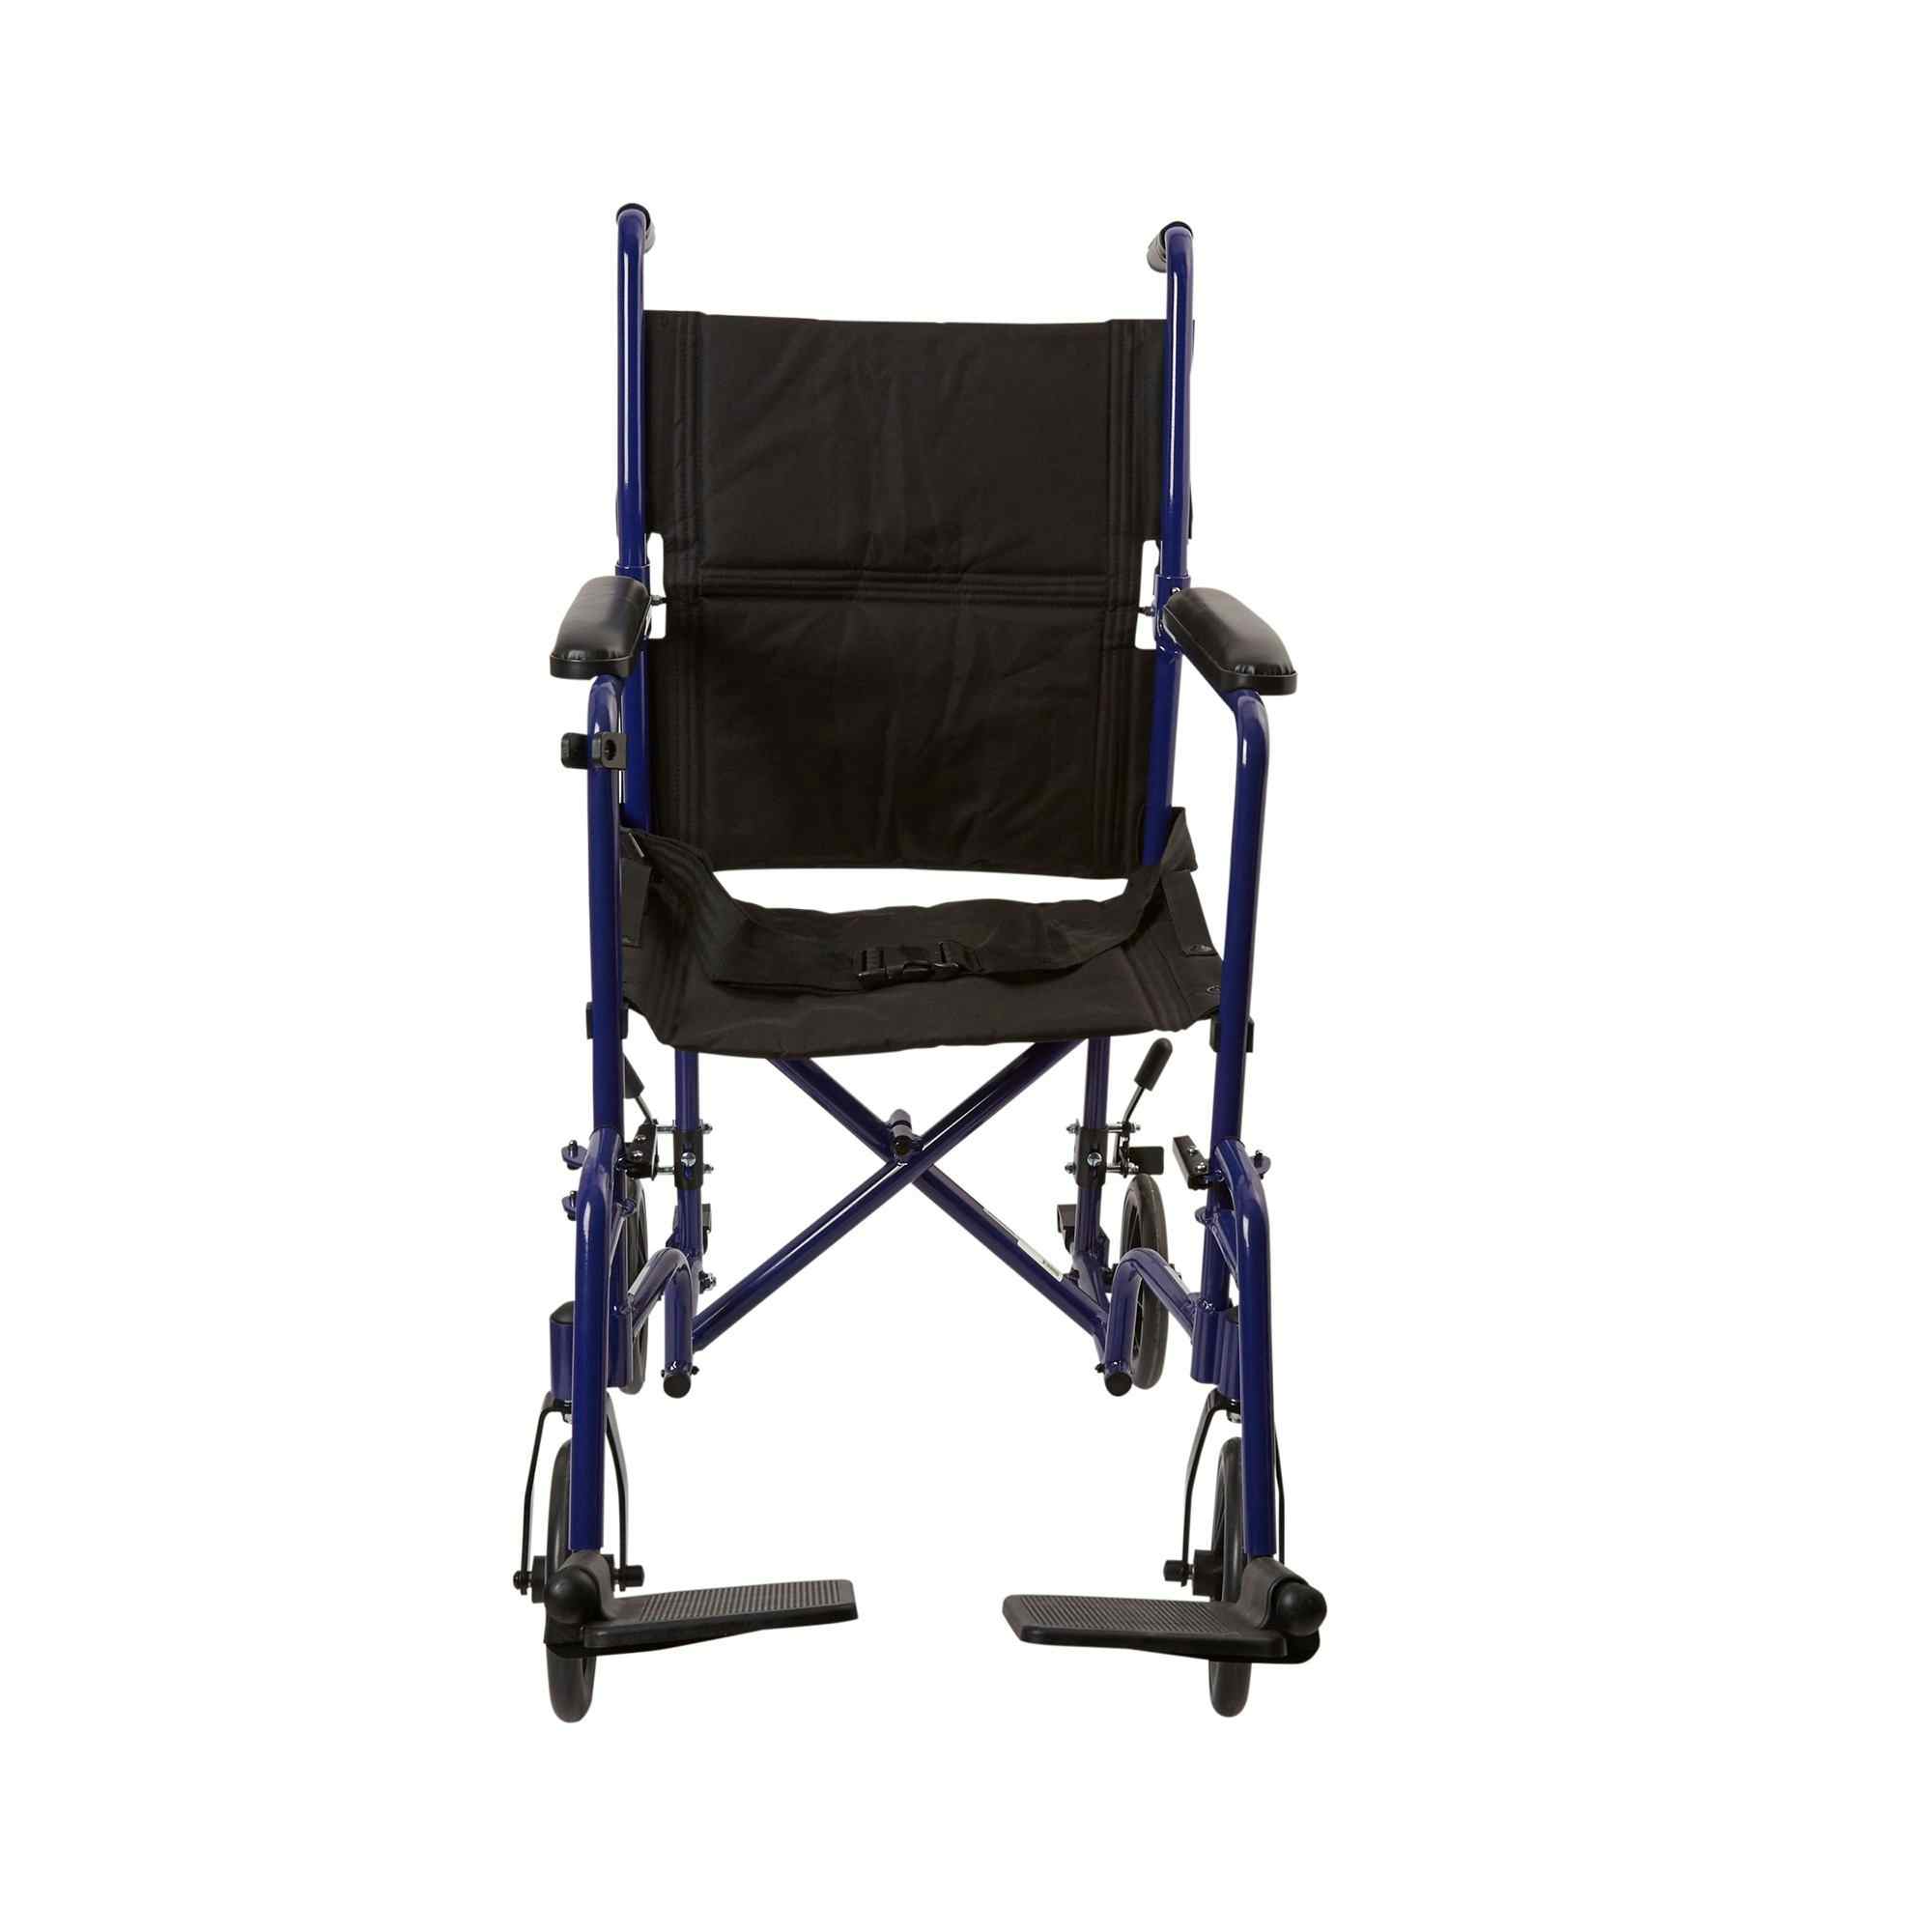 McKesson Lightweight Transport Chair, Aluminum Frame, 146-ATC19-BL, Black with Blue Finish - 1 Each